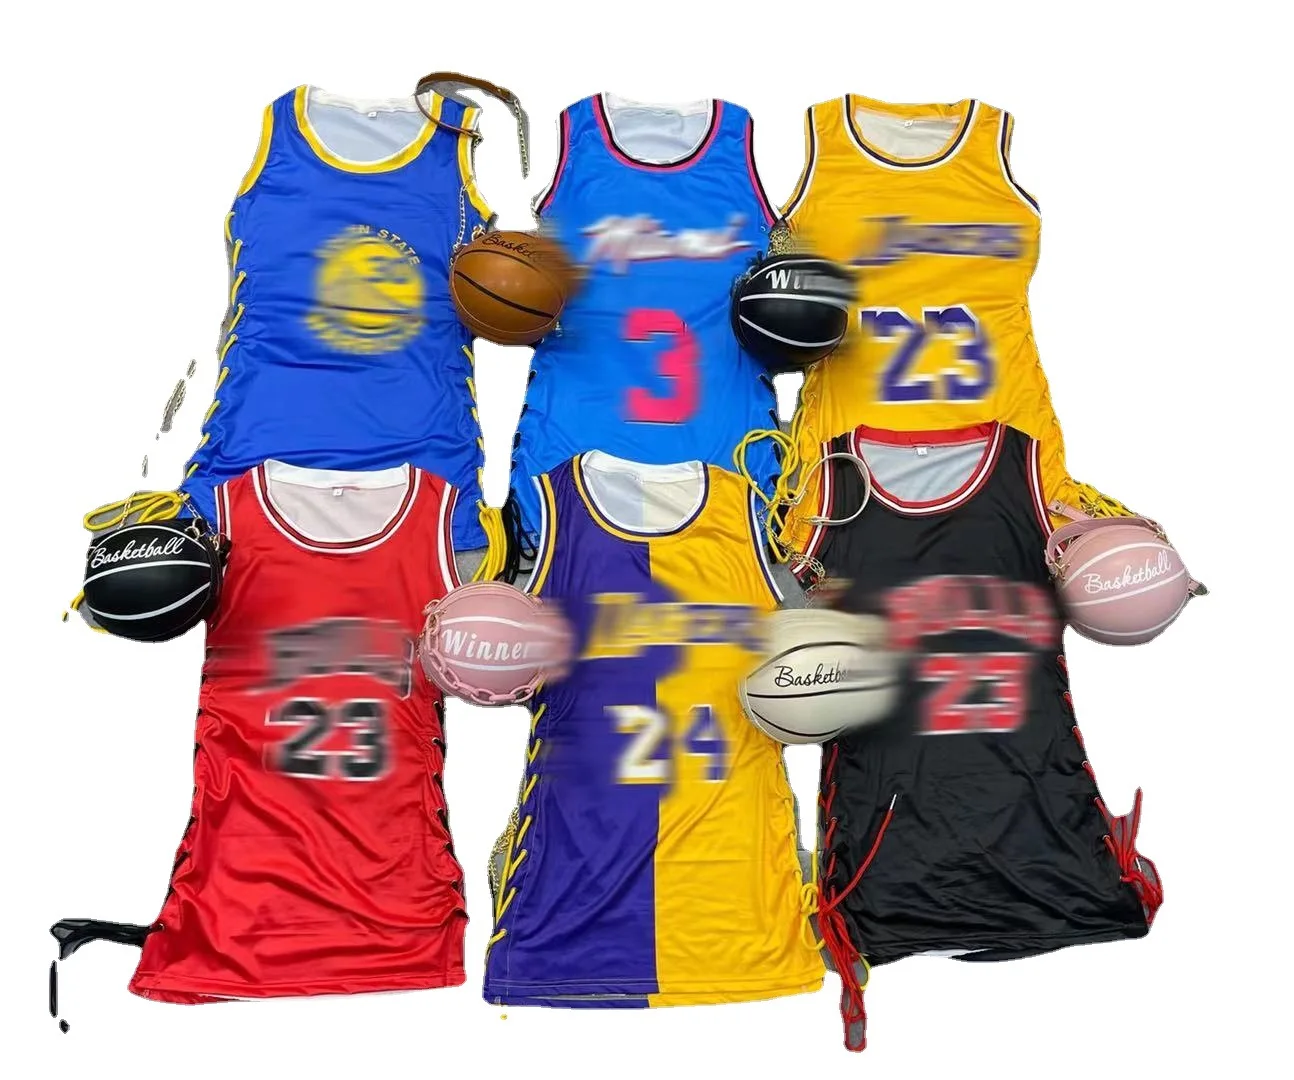 

J-420 Custom fashion Sports style sexy Bulls #23 design basketball jersey dress for women basketball uniforms sets, Picture